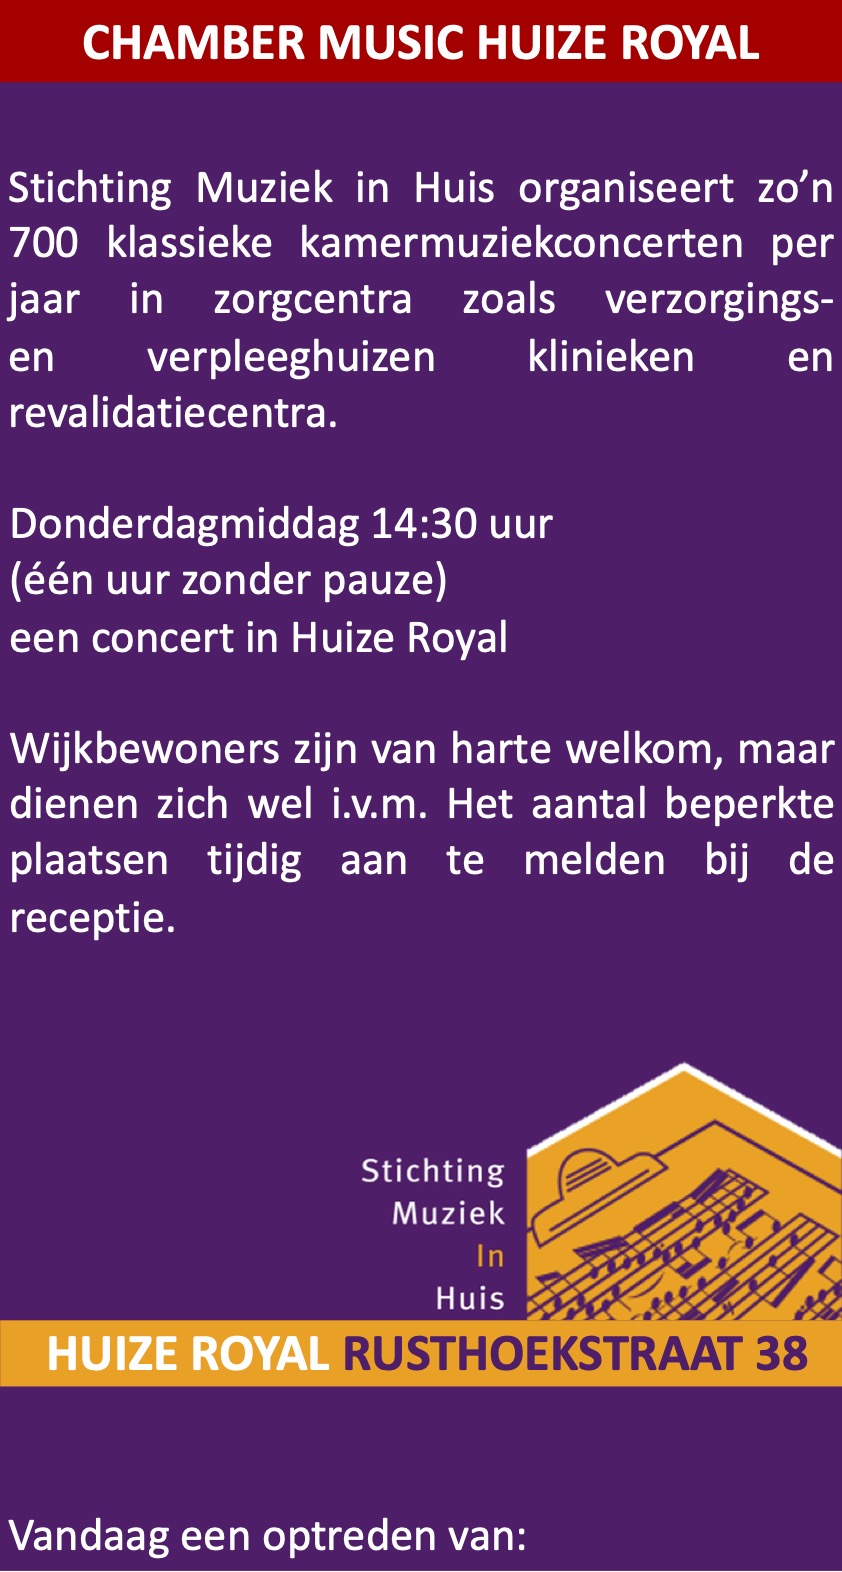 Stichting Muziek in Huiscare for Jazz MiH Concertagenda Scheveningen